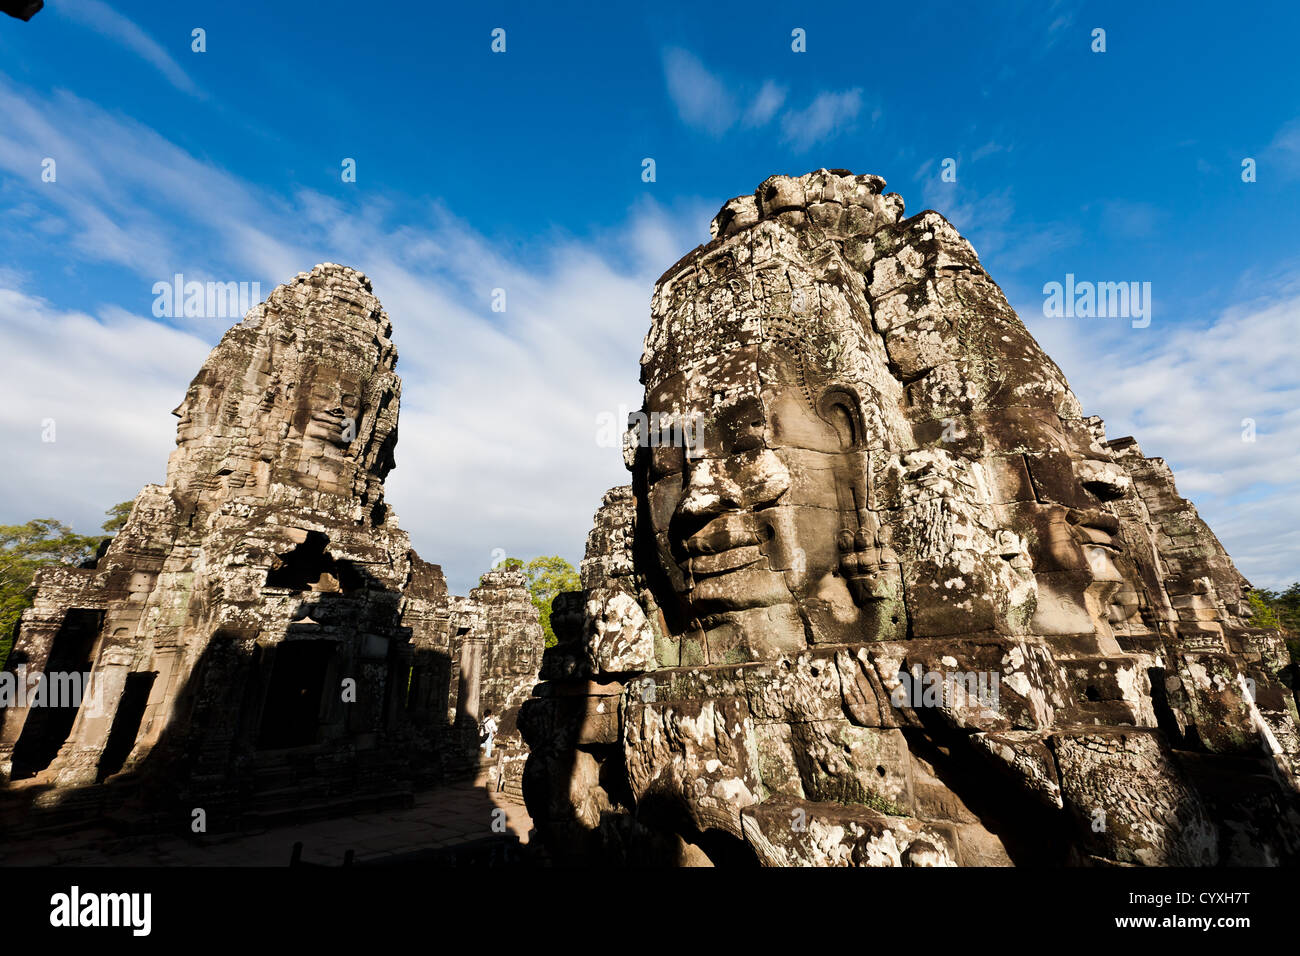 Berühmte Kopf Statuen des Alten prasat Bayon Tempel in Angkor Wat, Siem Reap, Kambodscha ein Unesco Weltkulturerbe Stockfoto